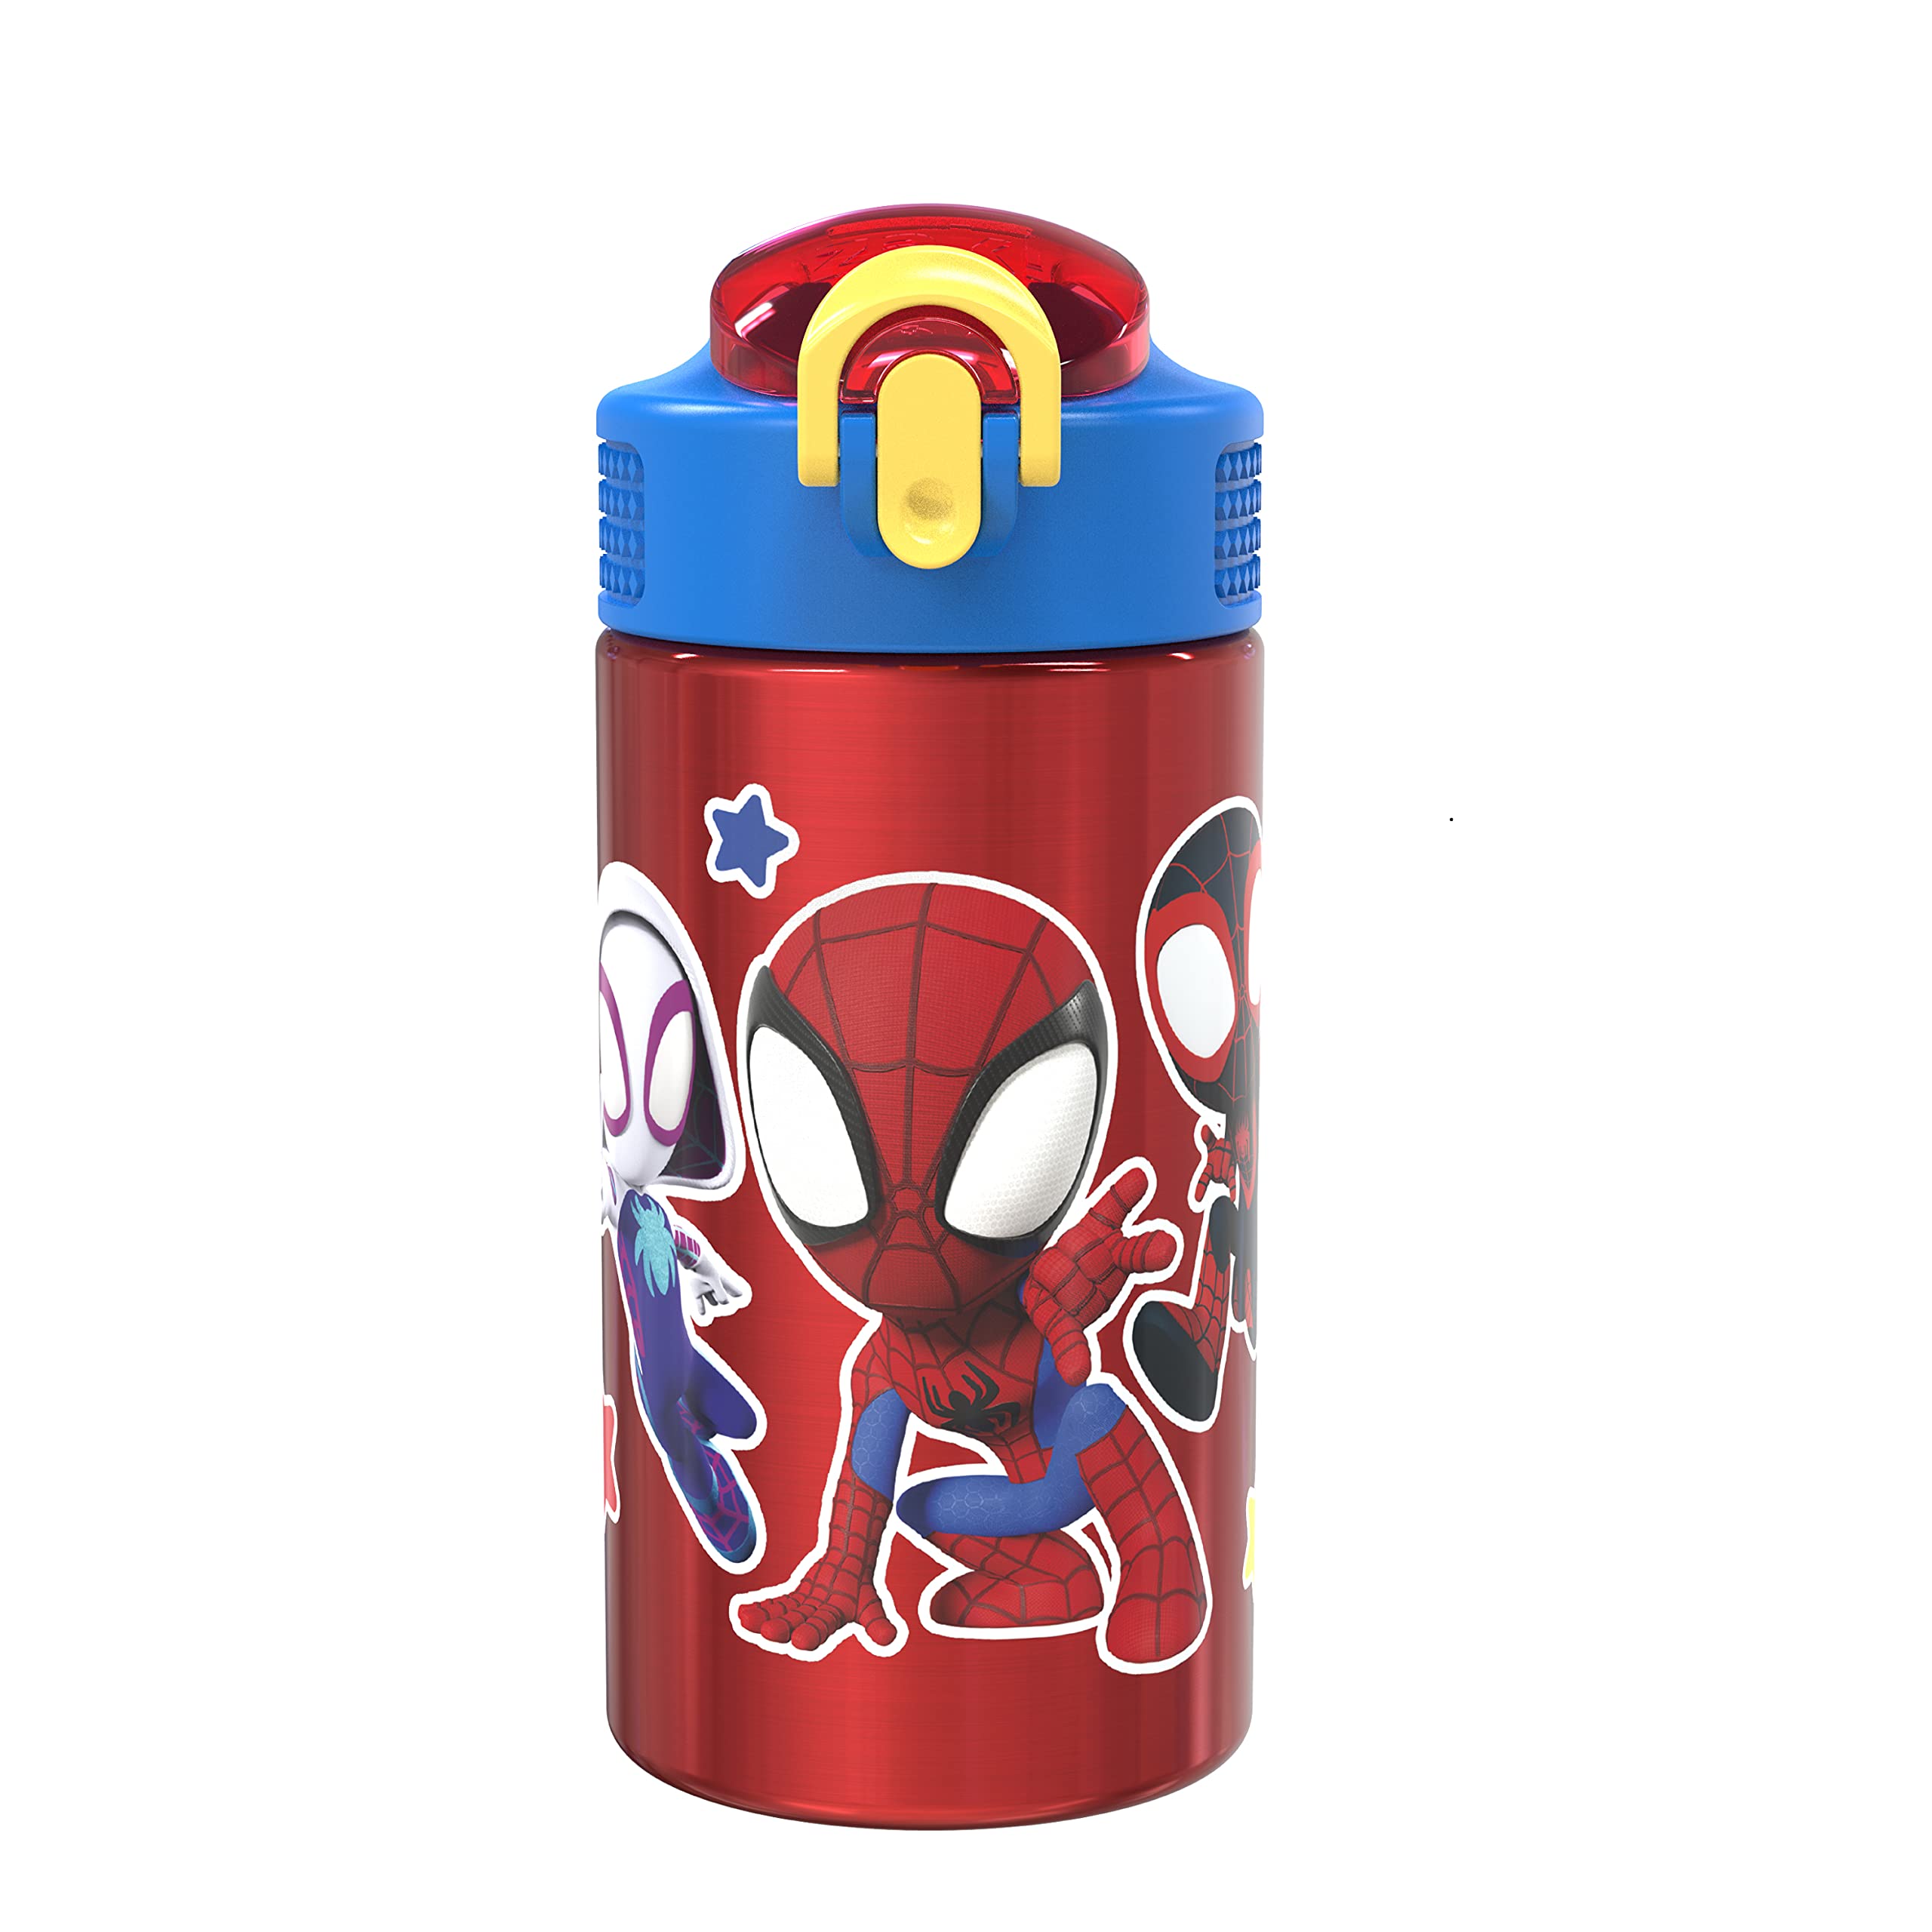 2 Pcs Marvel Spiderman Tumbler - Spider-Man Red Cup